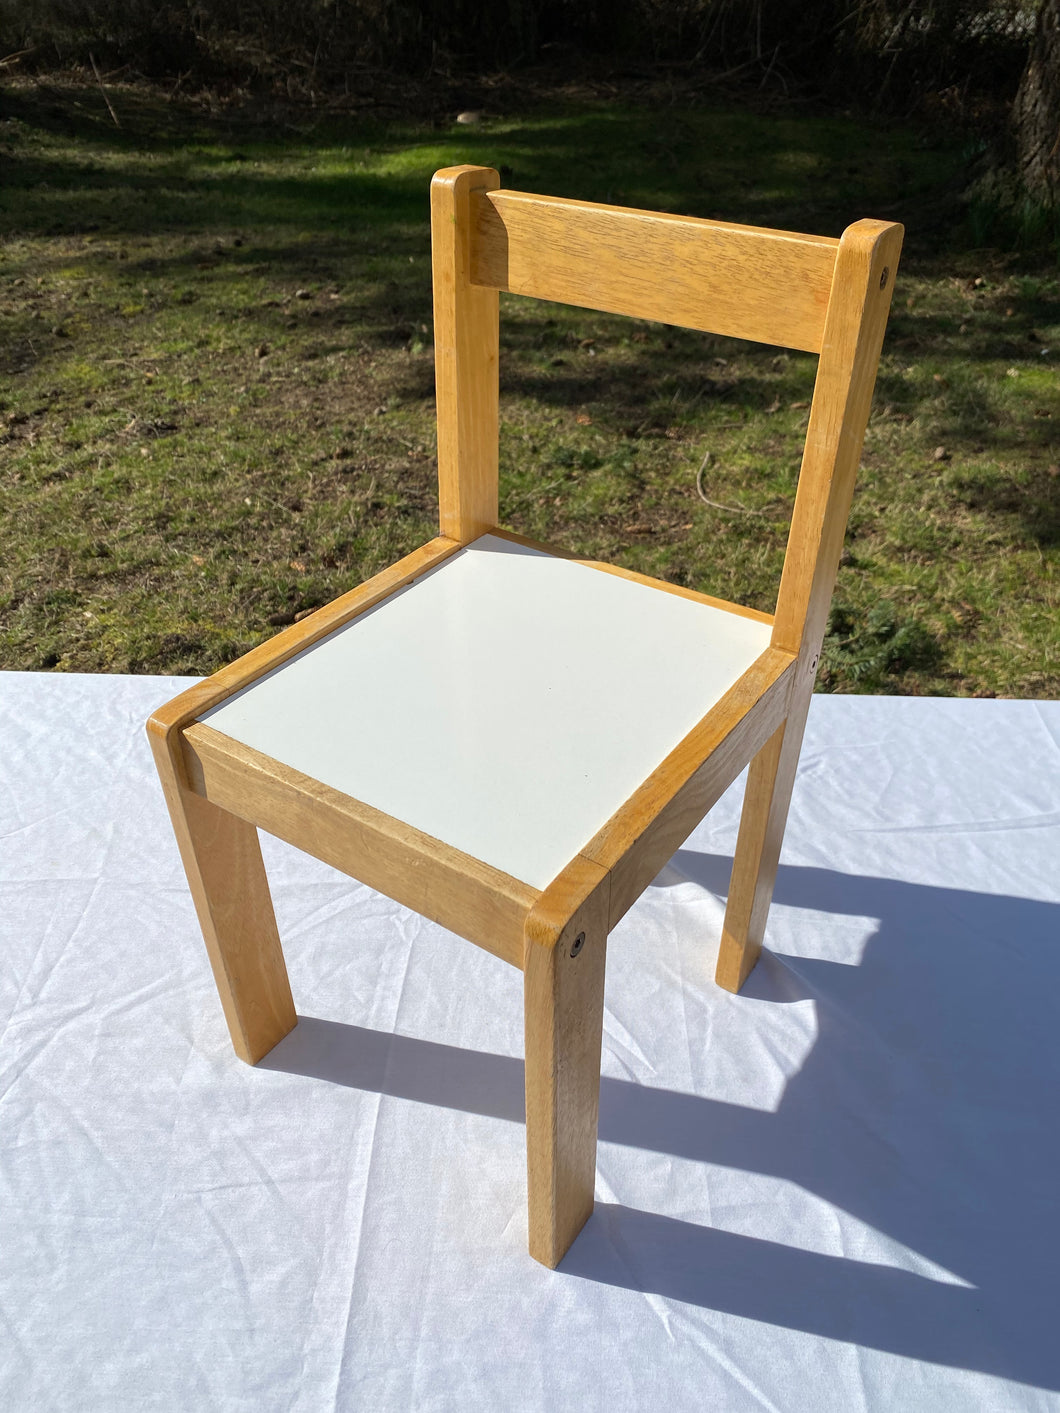 Wooden Chair # : 11.5